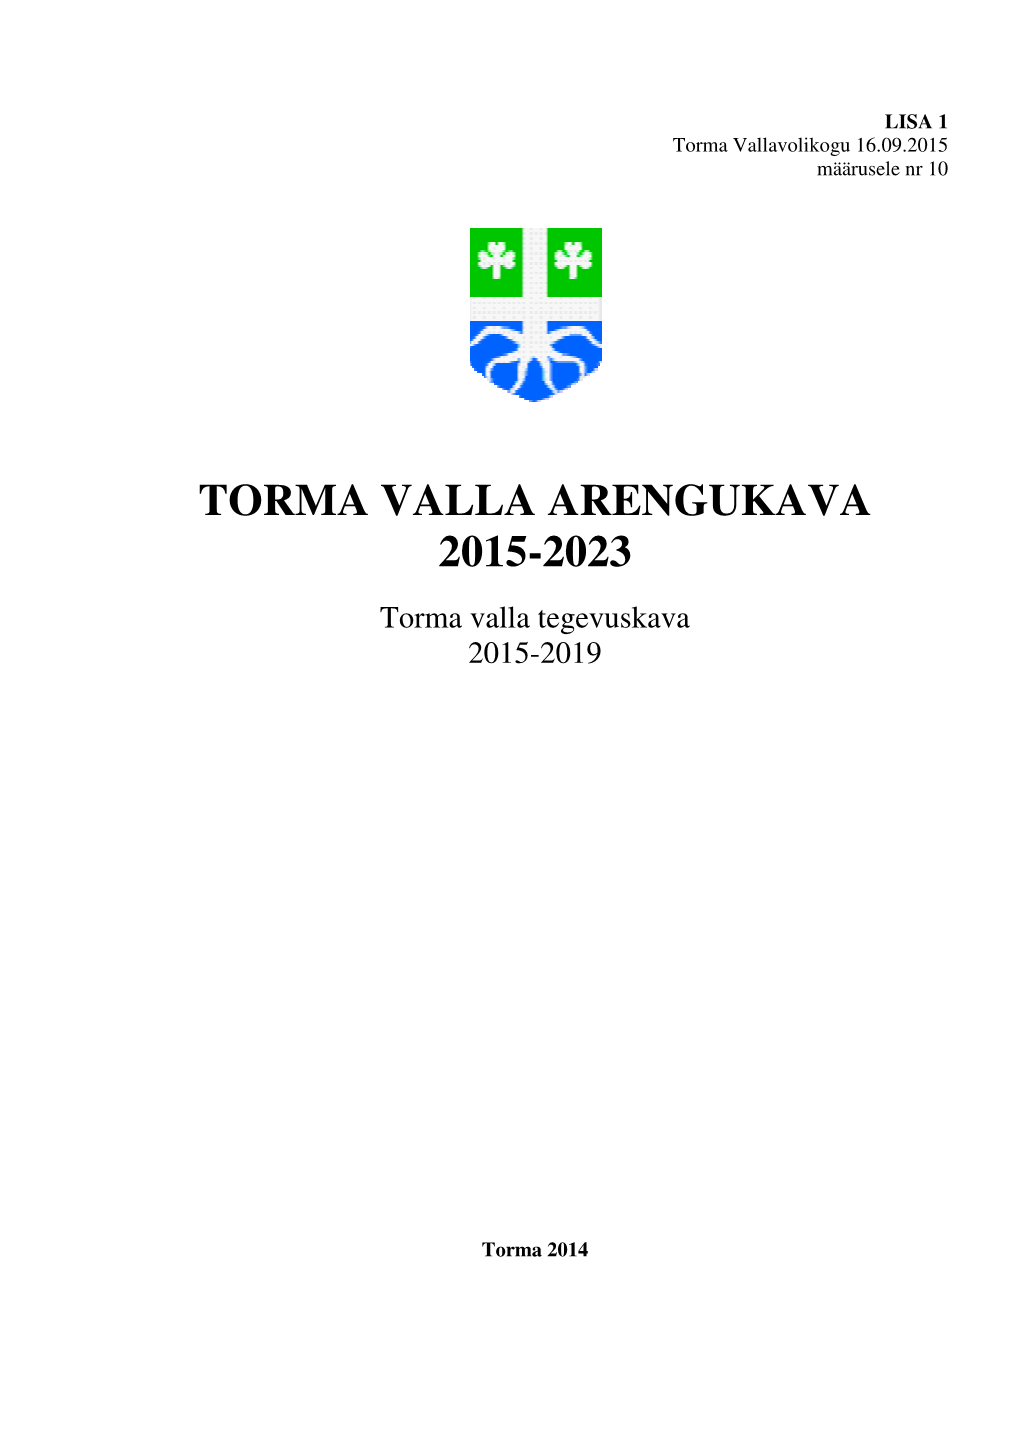 Torma Valla Arengukava 2015-2023